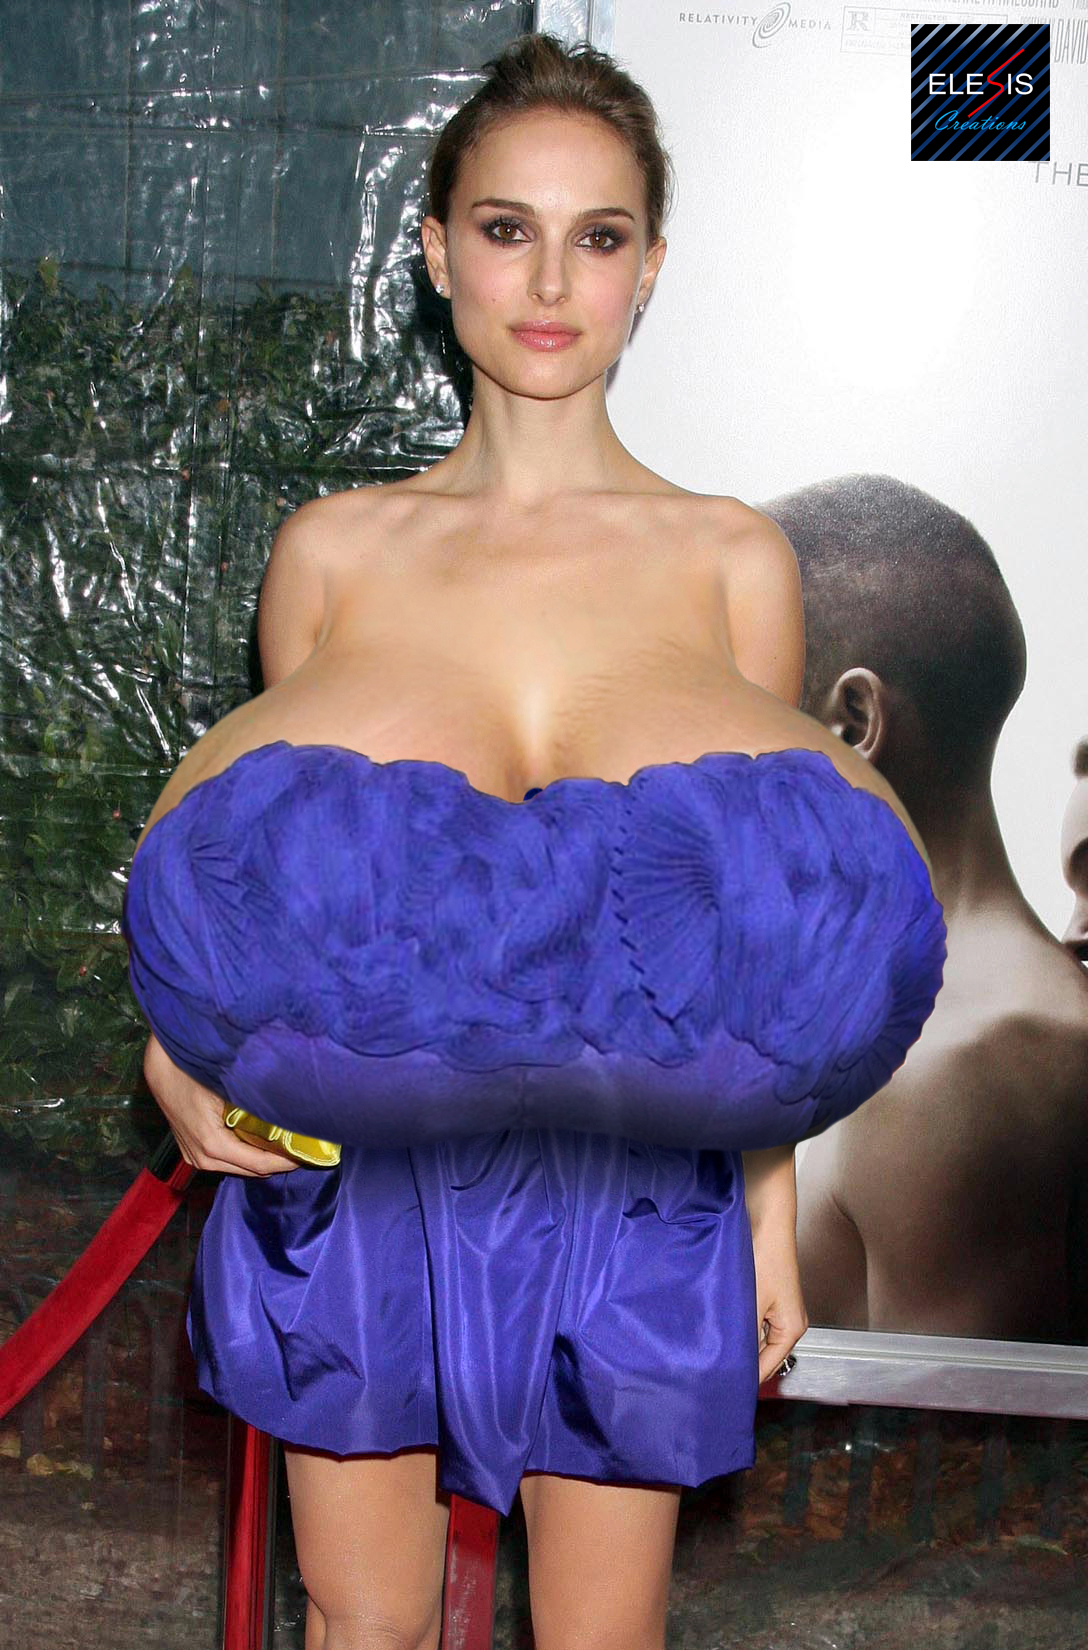 Incredible Big Tits - Natalie Portman incredible huge boobs â€“ Big Boobs Celebrities